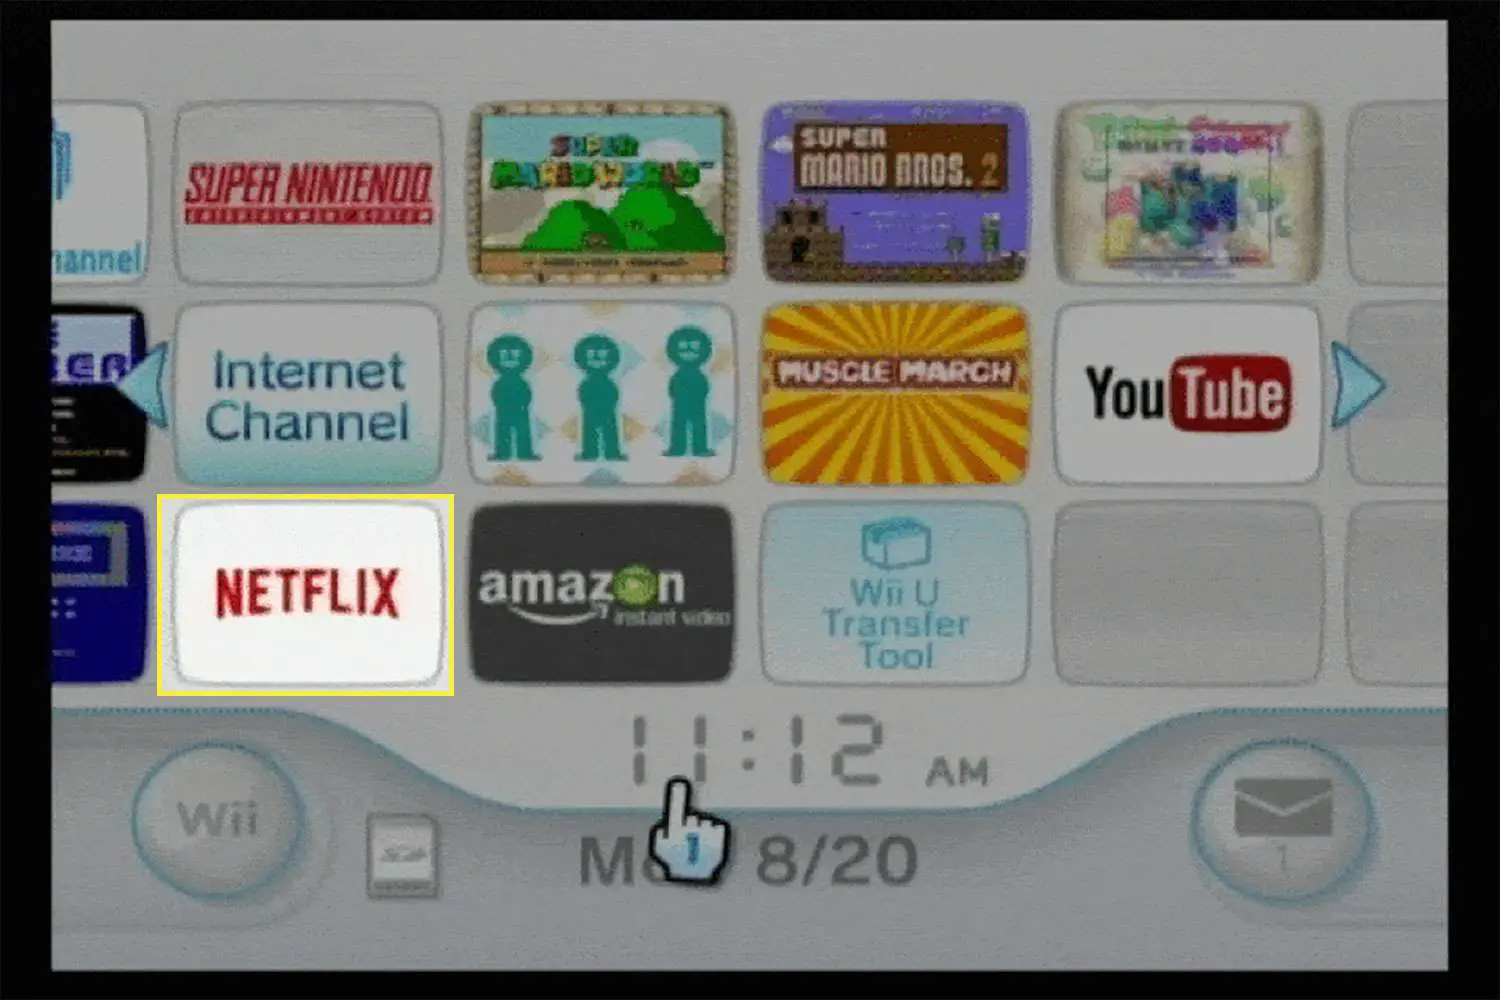 O canal Netflix na tela inicial do Wii